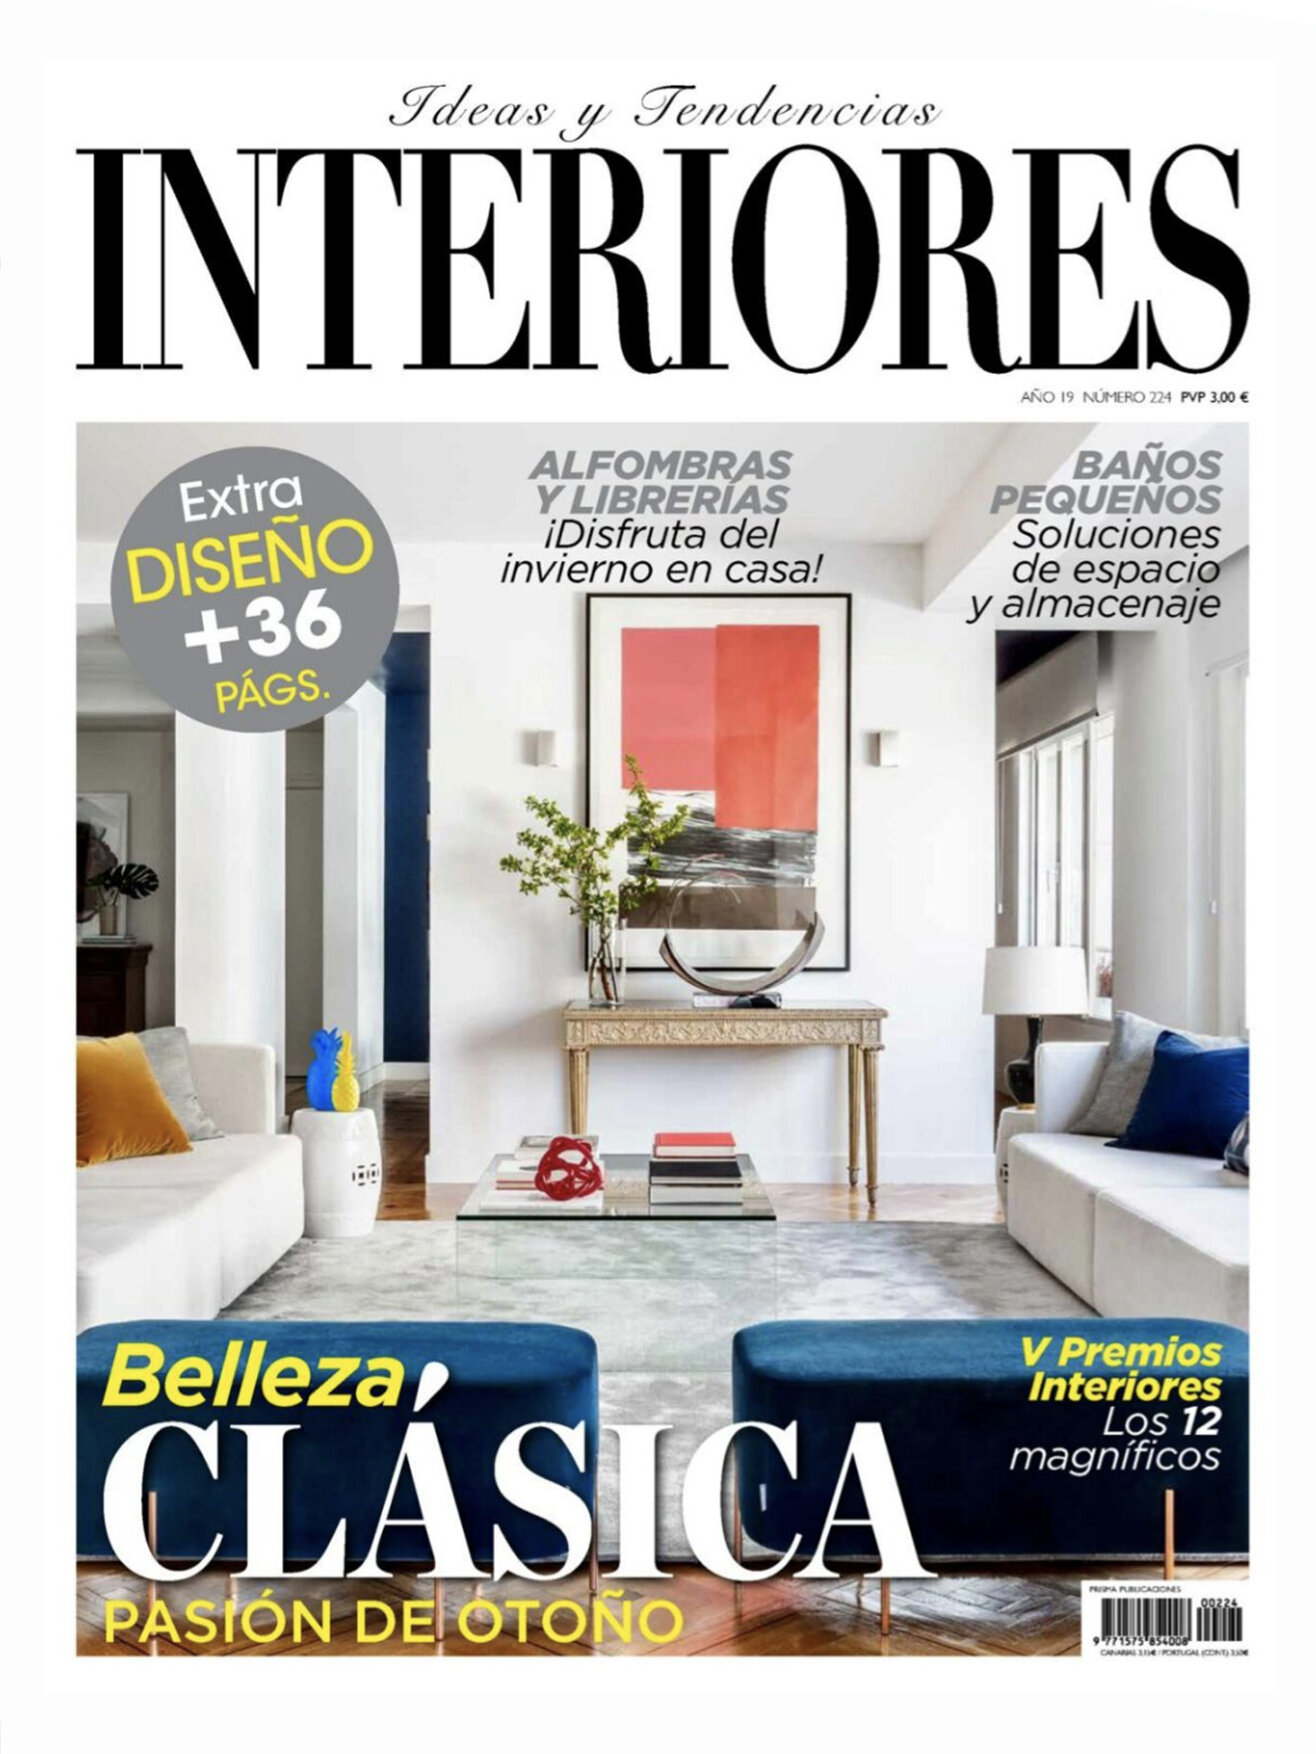 Interiores Mag, November 2019